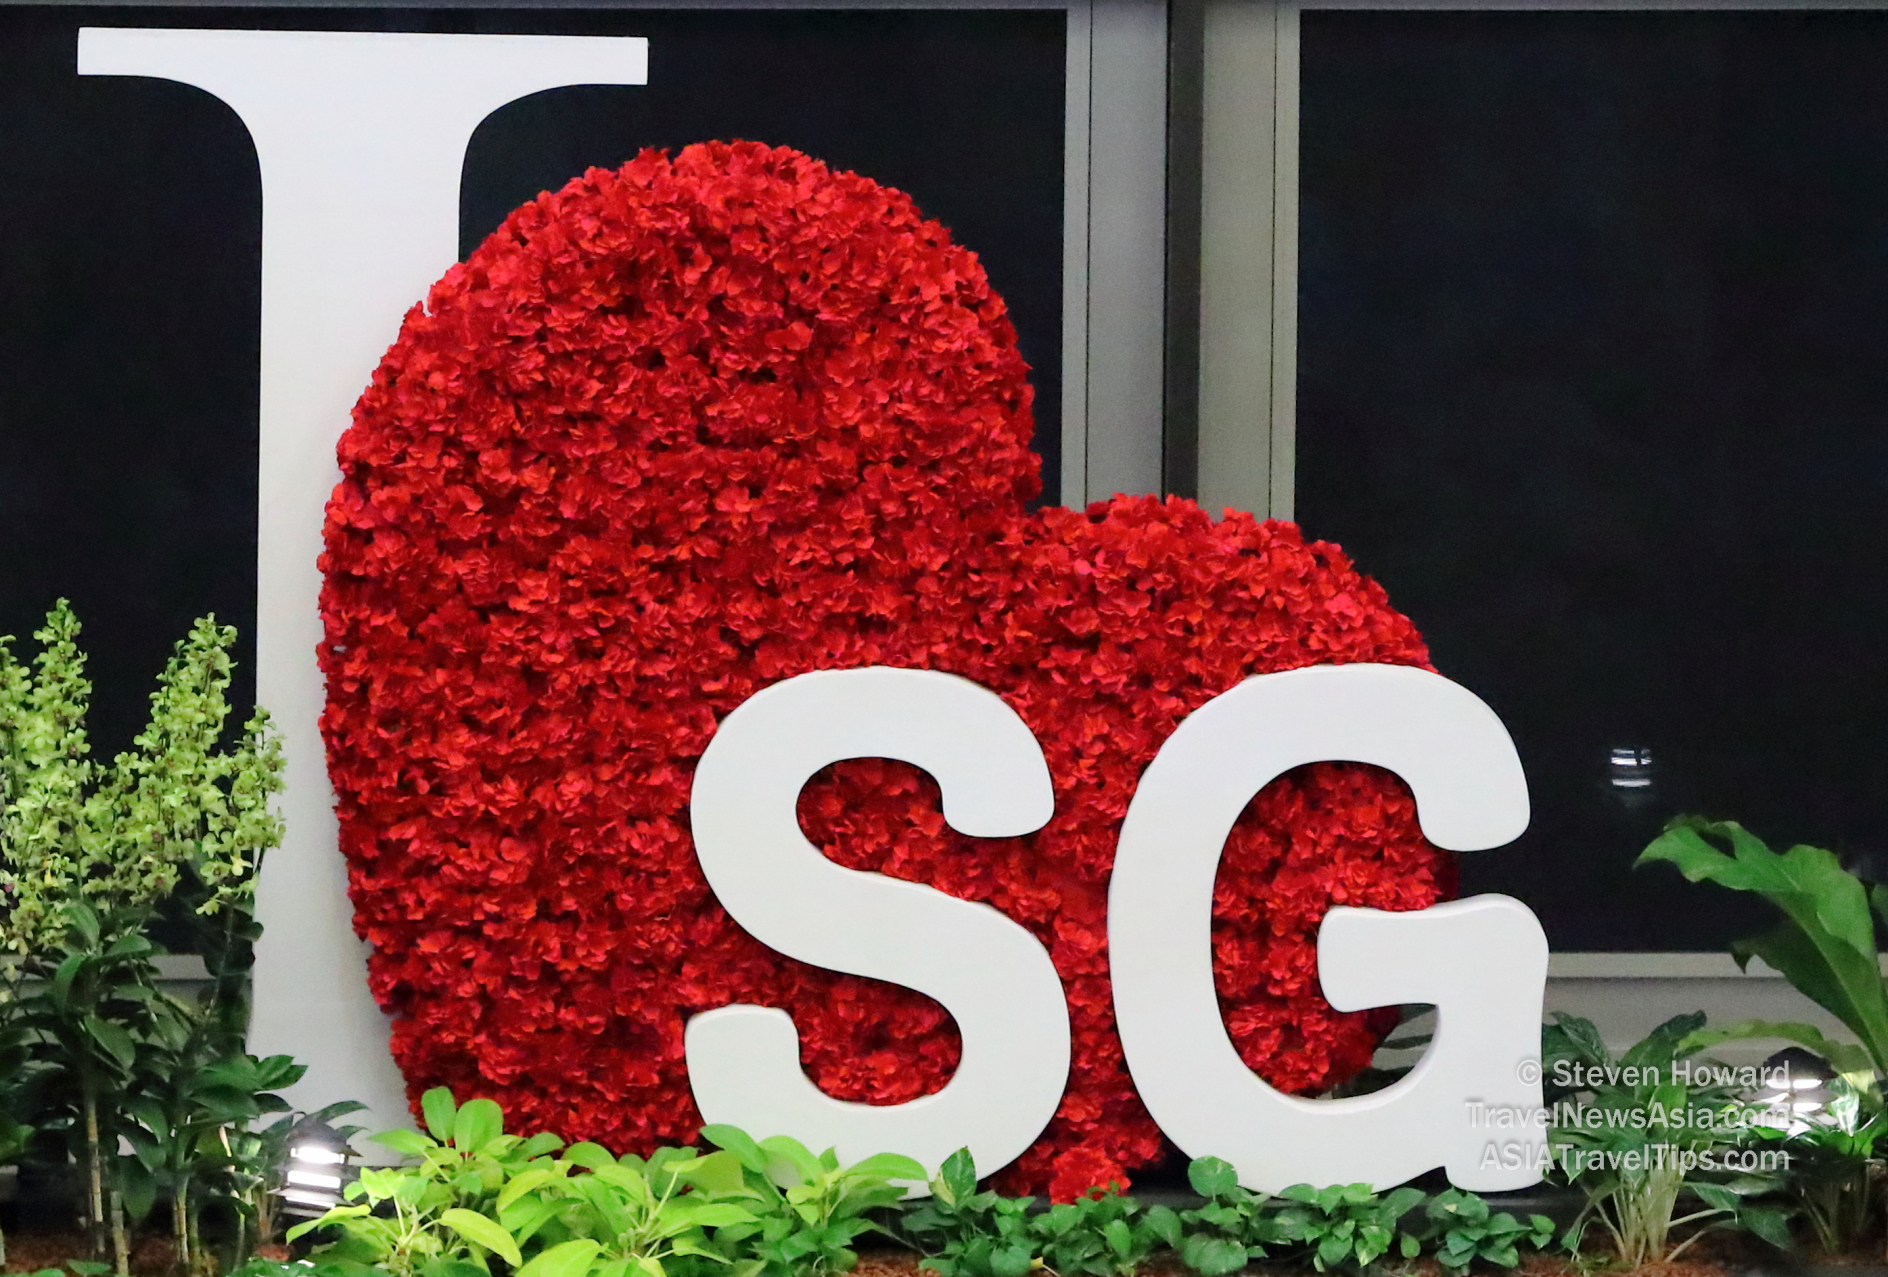 'I Love SG' flower arrangement. Picture by Steven Howard of TravelNewsAsia.com Click to enlarge.